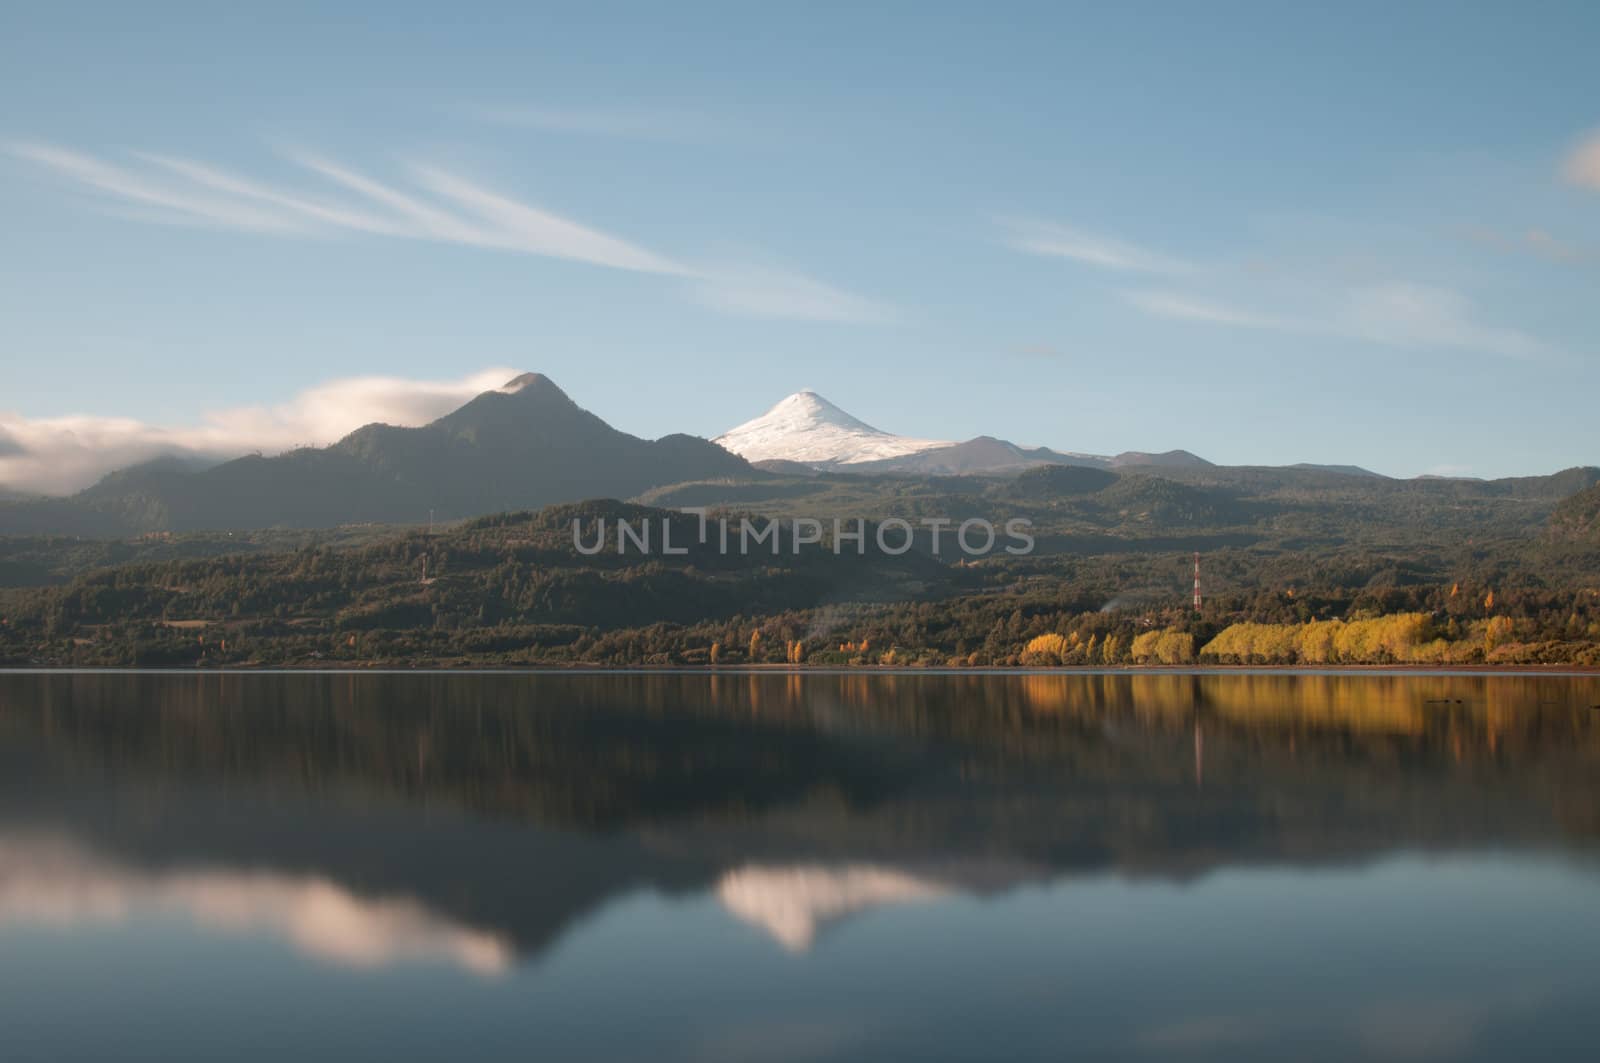 Reflection of the Volcano Villarica on the coñaripe city lake (long exposure version)